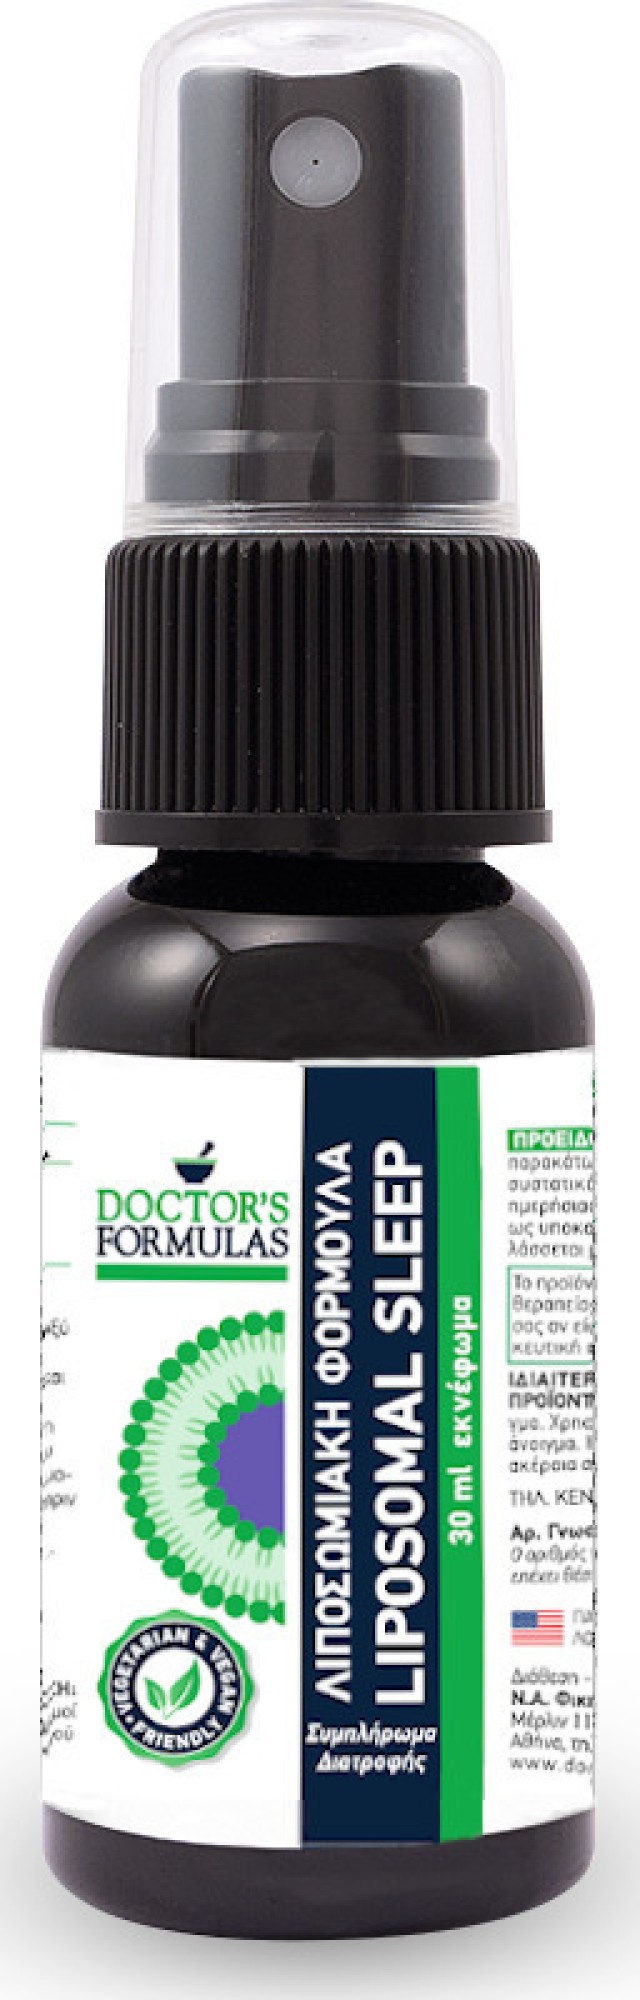 Doctors Formulas Liposomal Sleep Spray Λιποσωμιακή Φόρμουλα - Μελατονίνη για τον Ύπνο 30ml